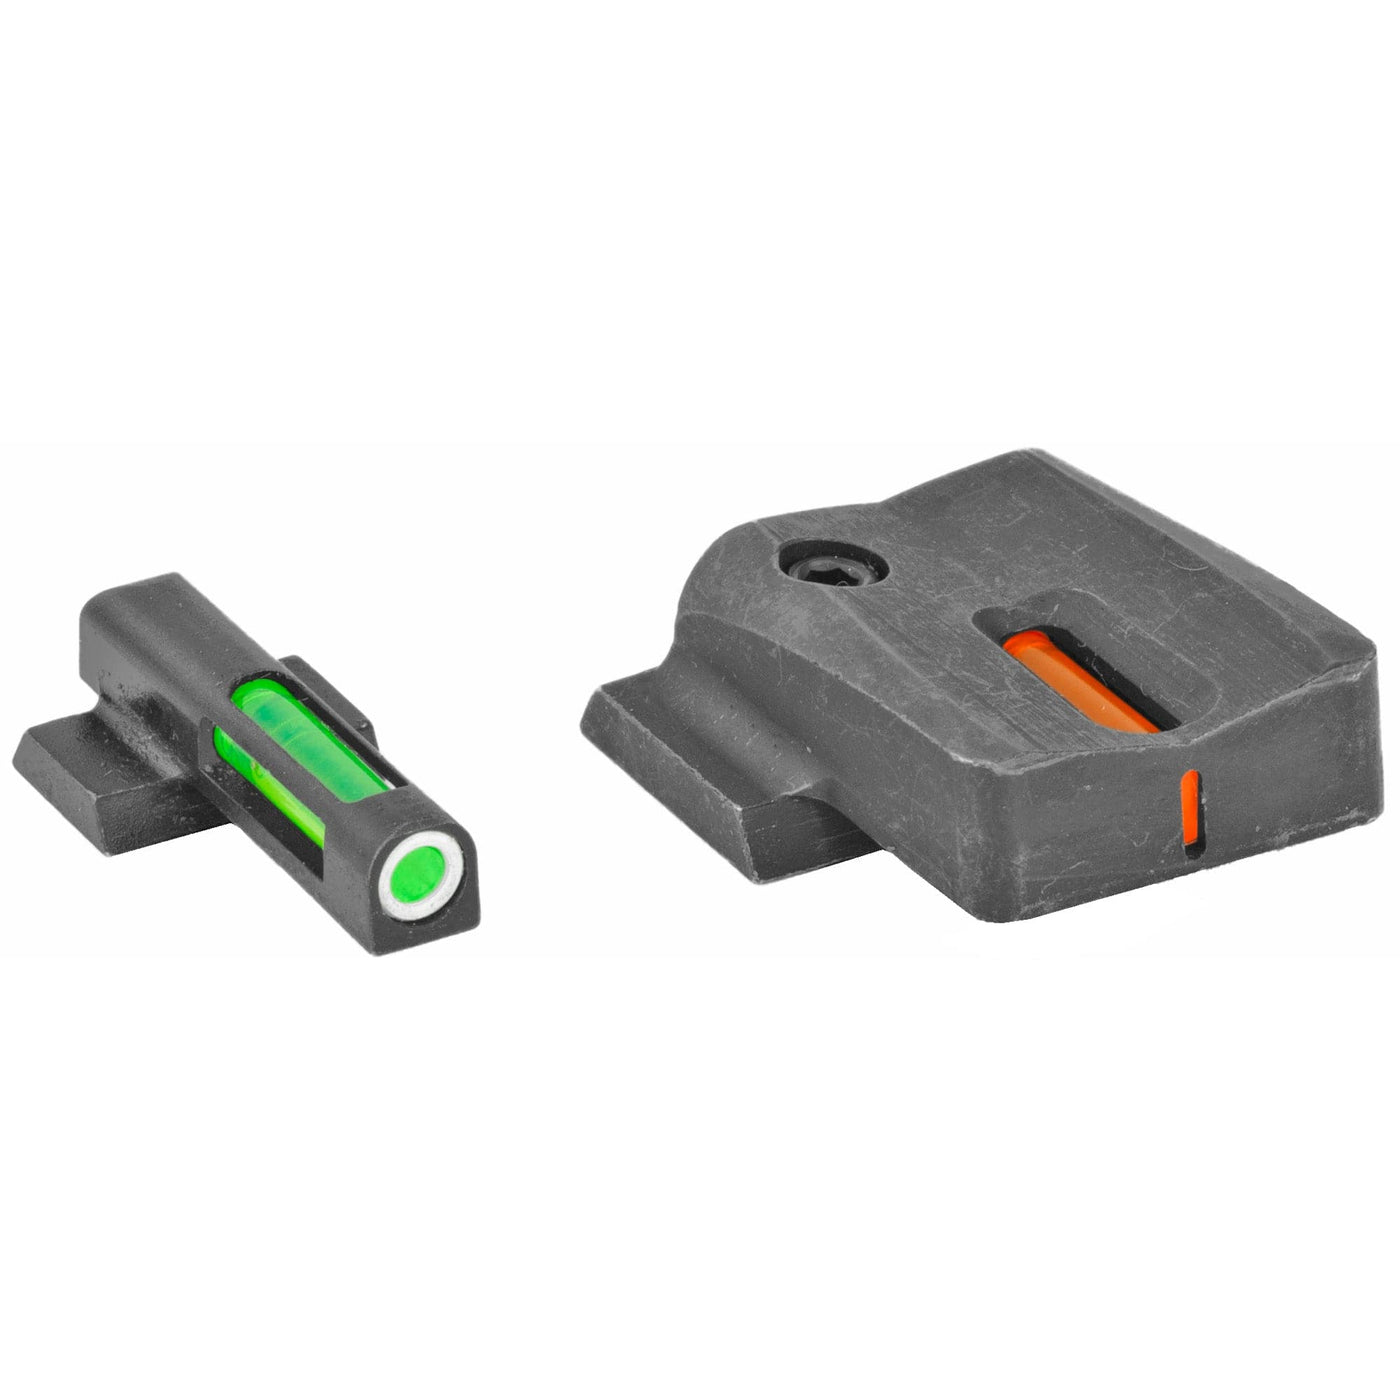 Hi-Viz Hiviz Litewave H3 Tritium Express Handgun Sight Green/orange Litepipes White Front Ring S&w Sheild Sights/Lasers/Lights